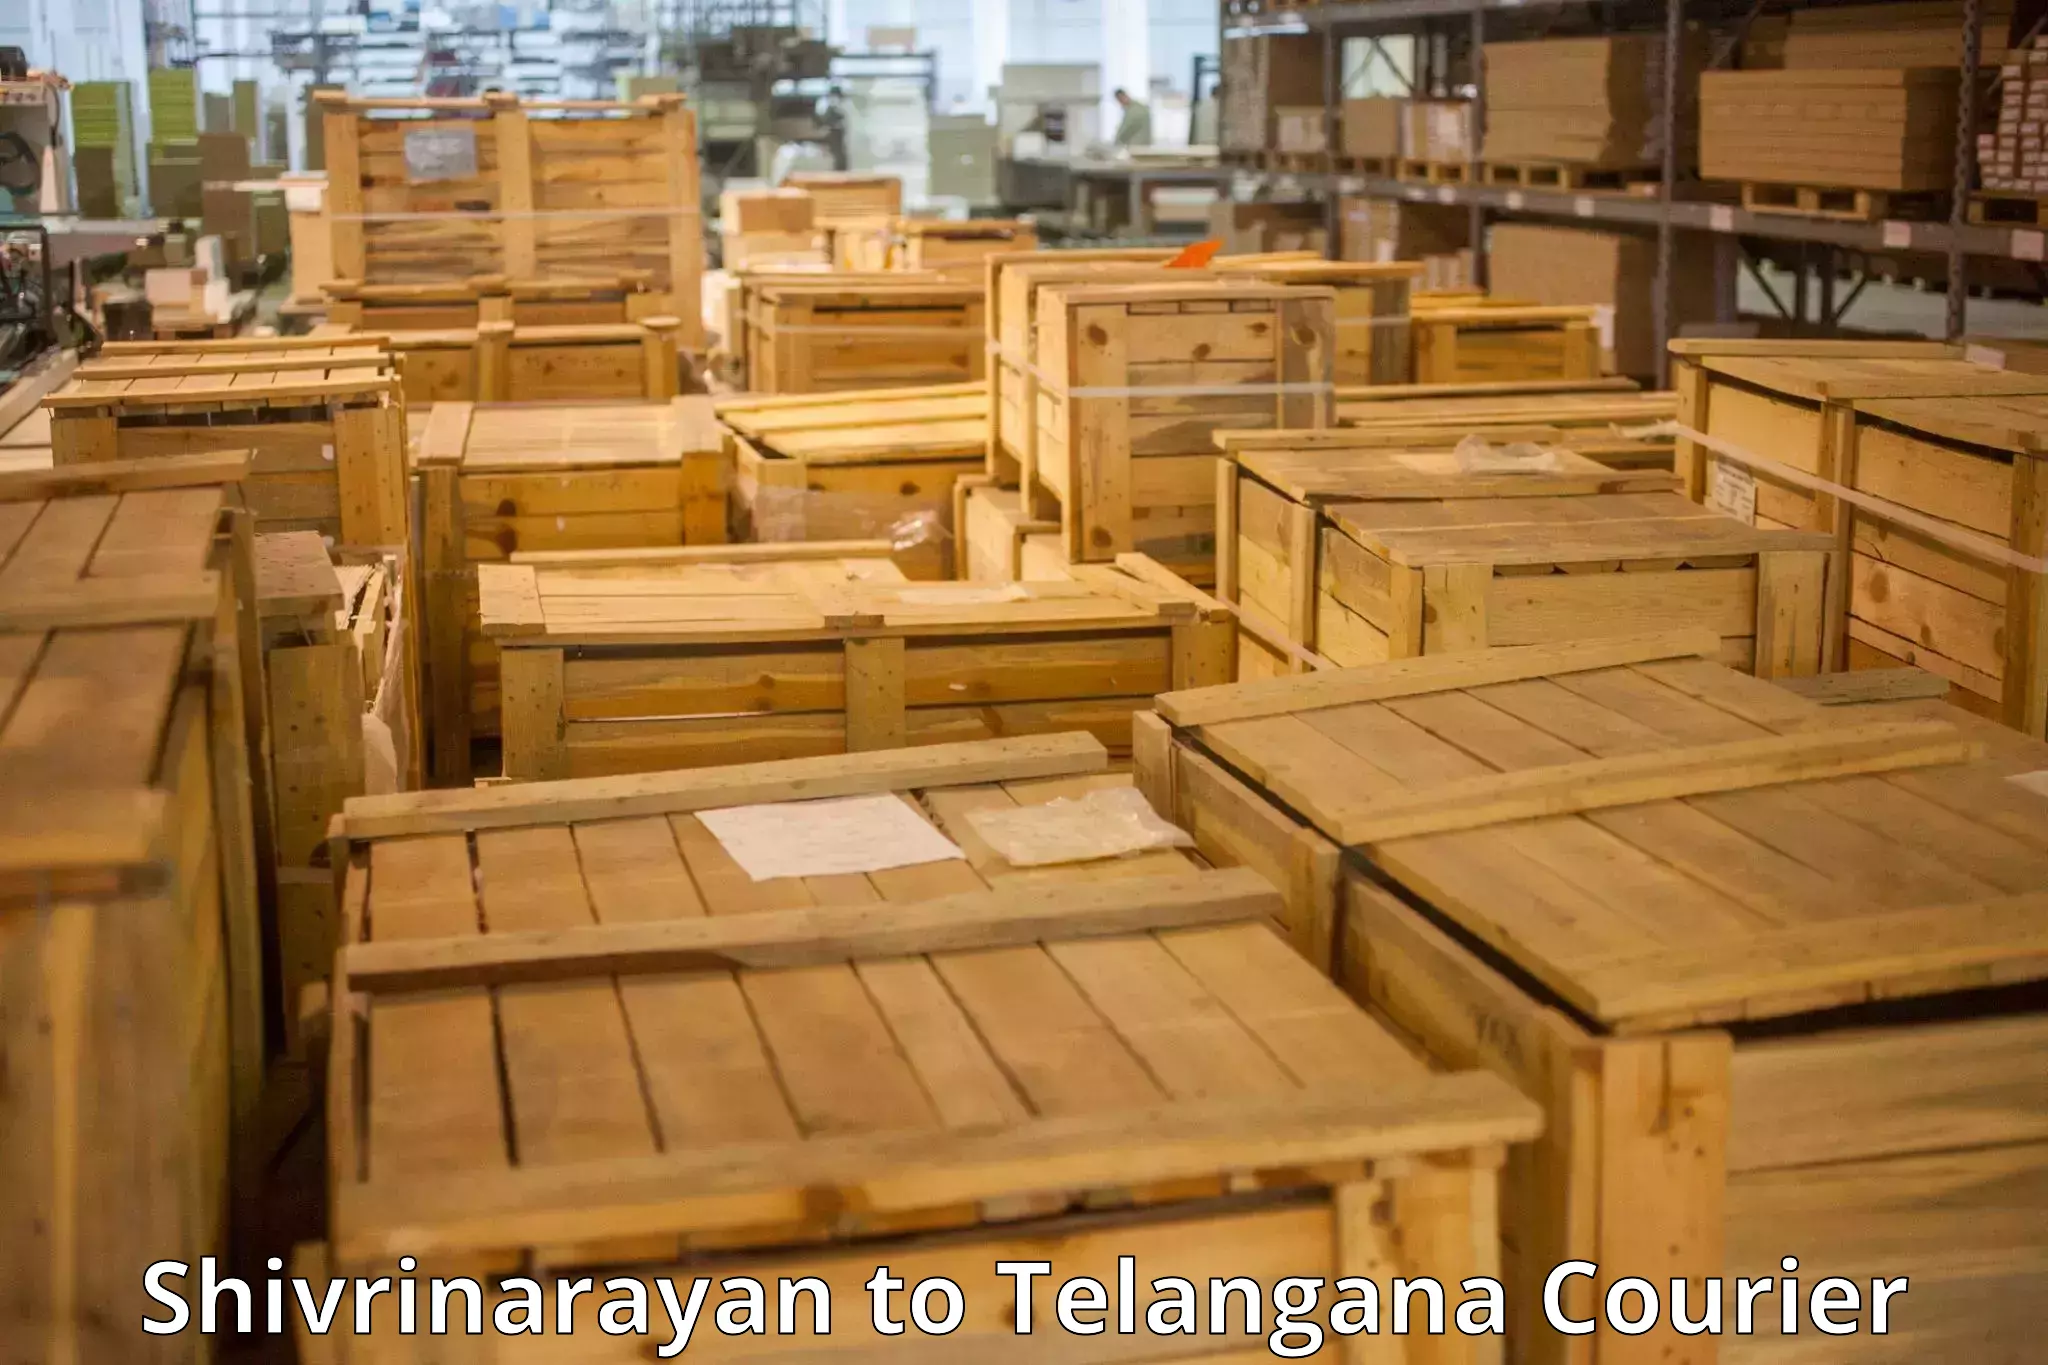 Luggage shipment tracking in Shivrinarayan to Tallada